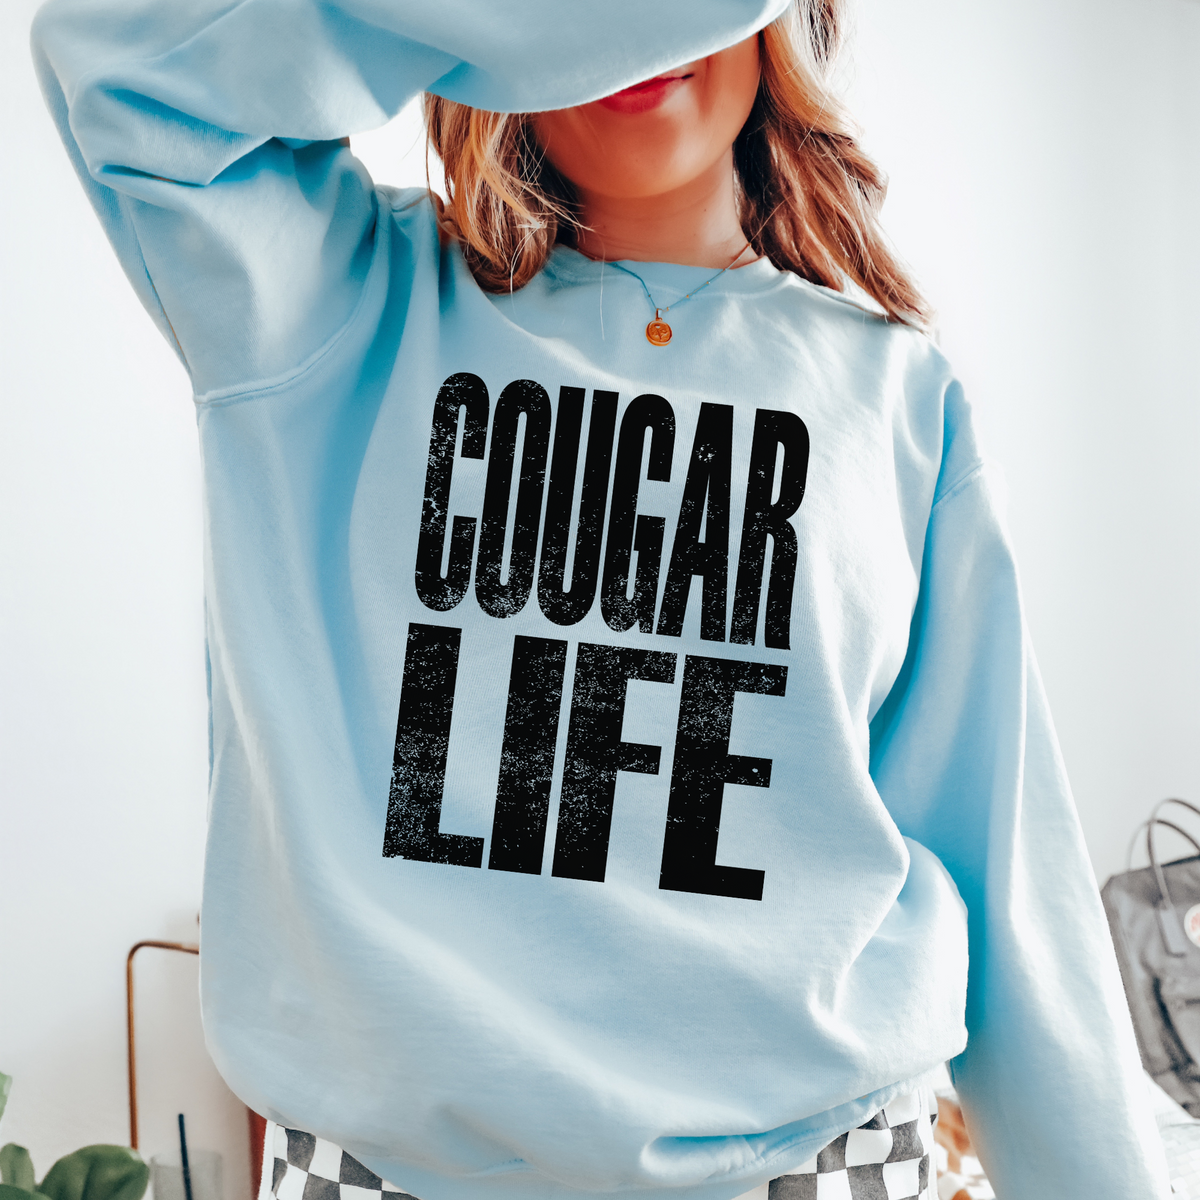 Cougar Life Faded Distressed Black Digital Design, PNG